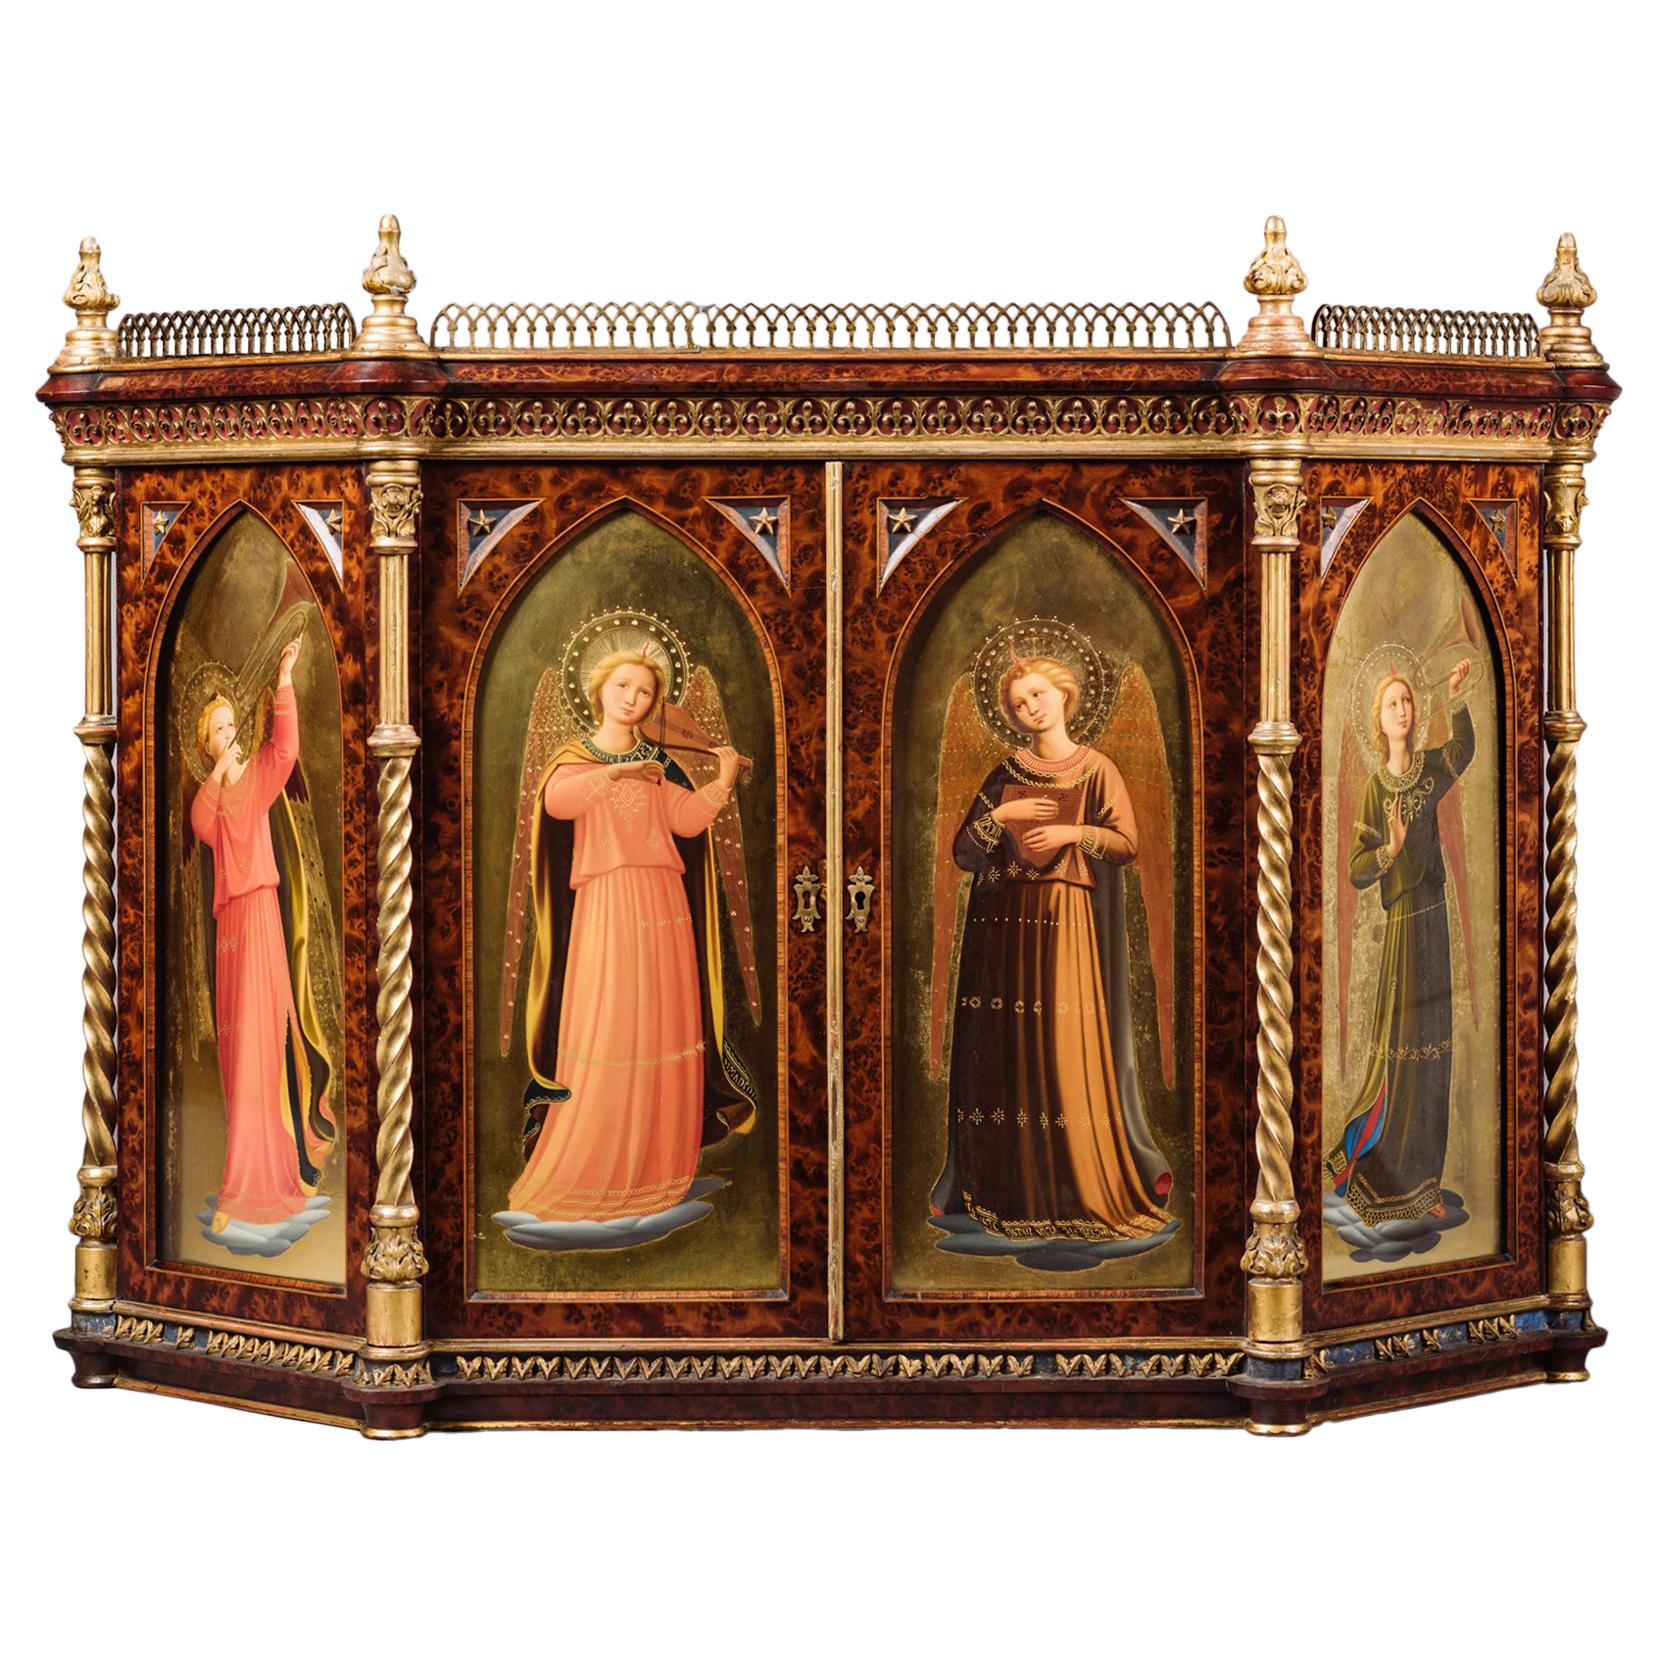 Italian Renaissance Revival Table Cabinet by Raphaello Cipriani, circa 1870